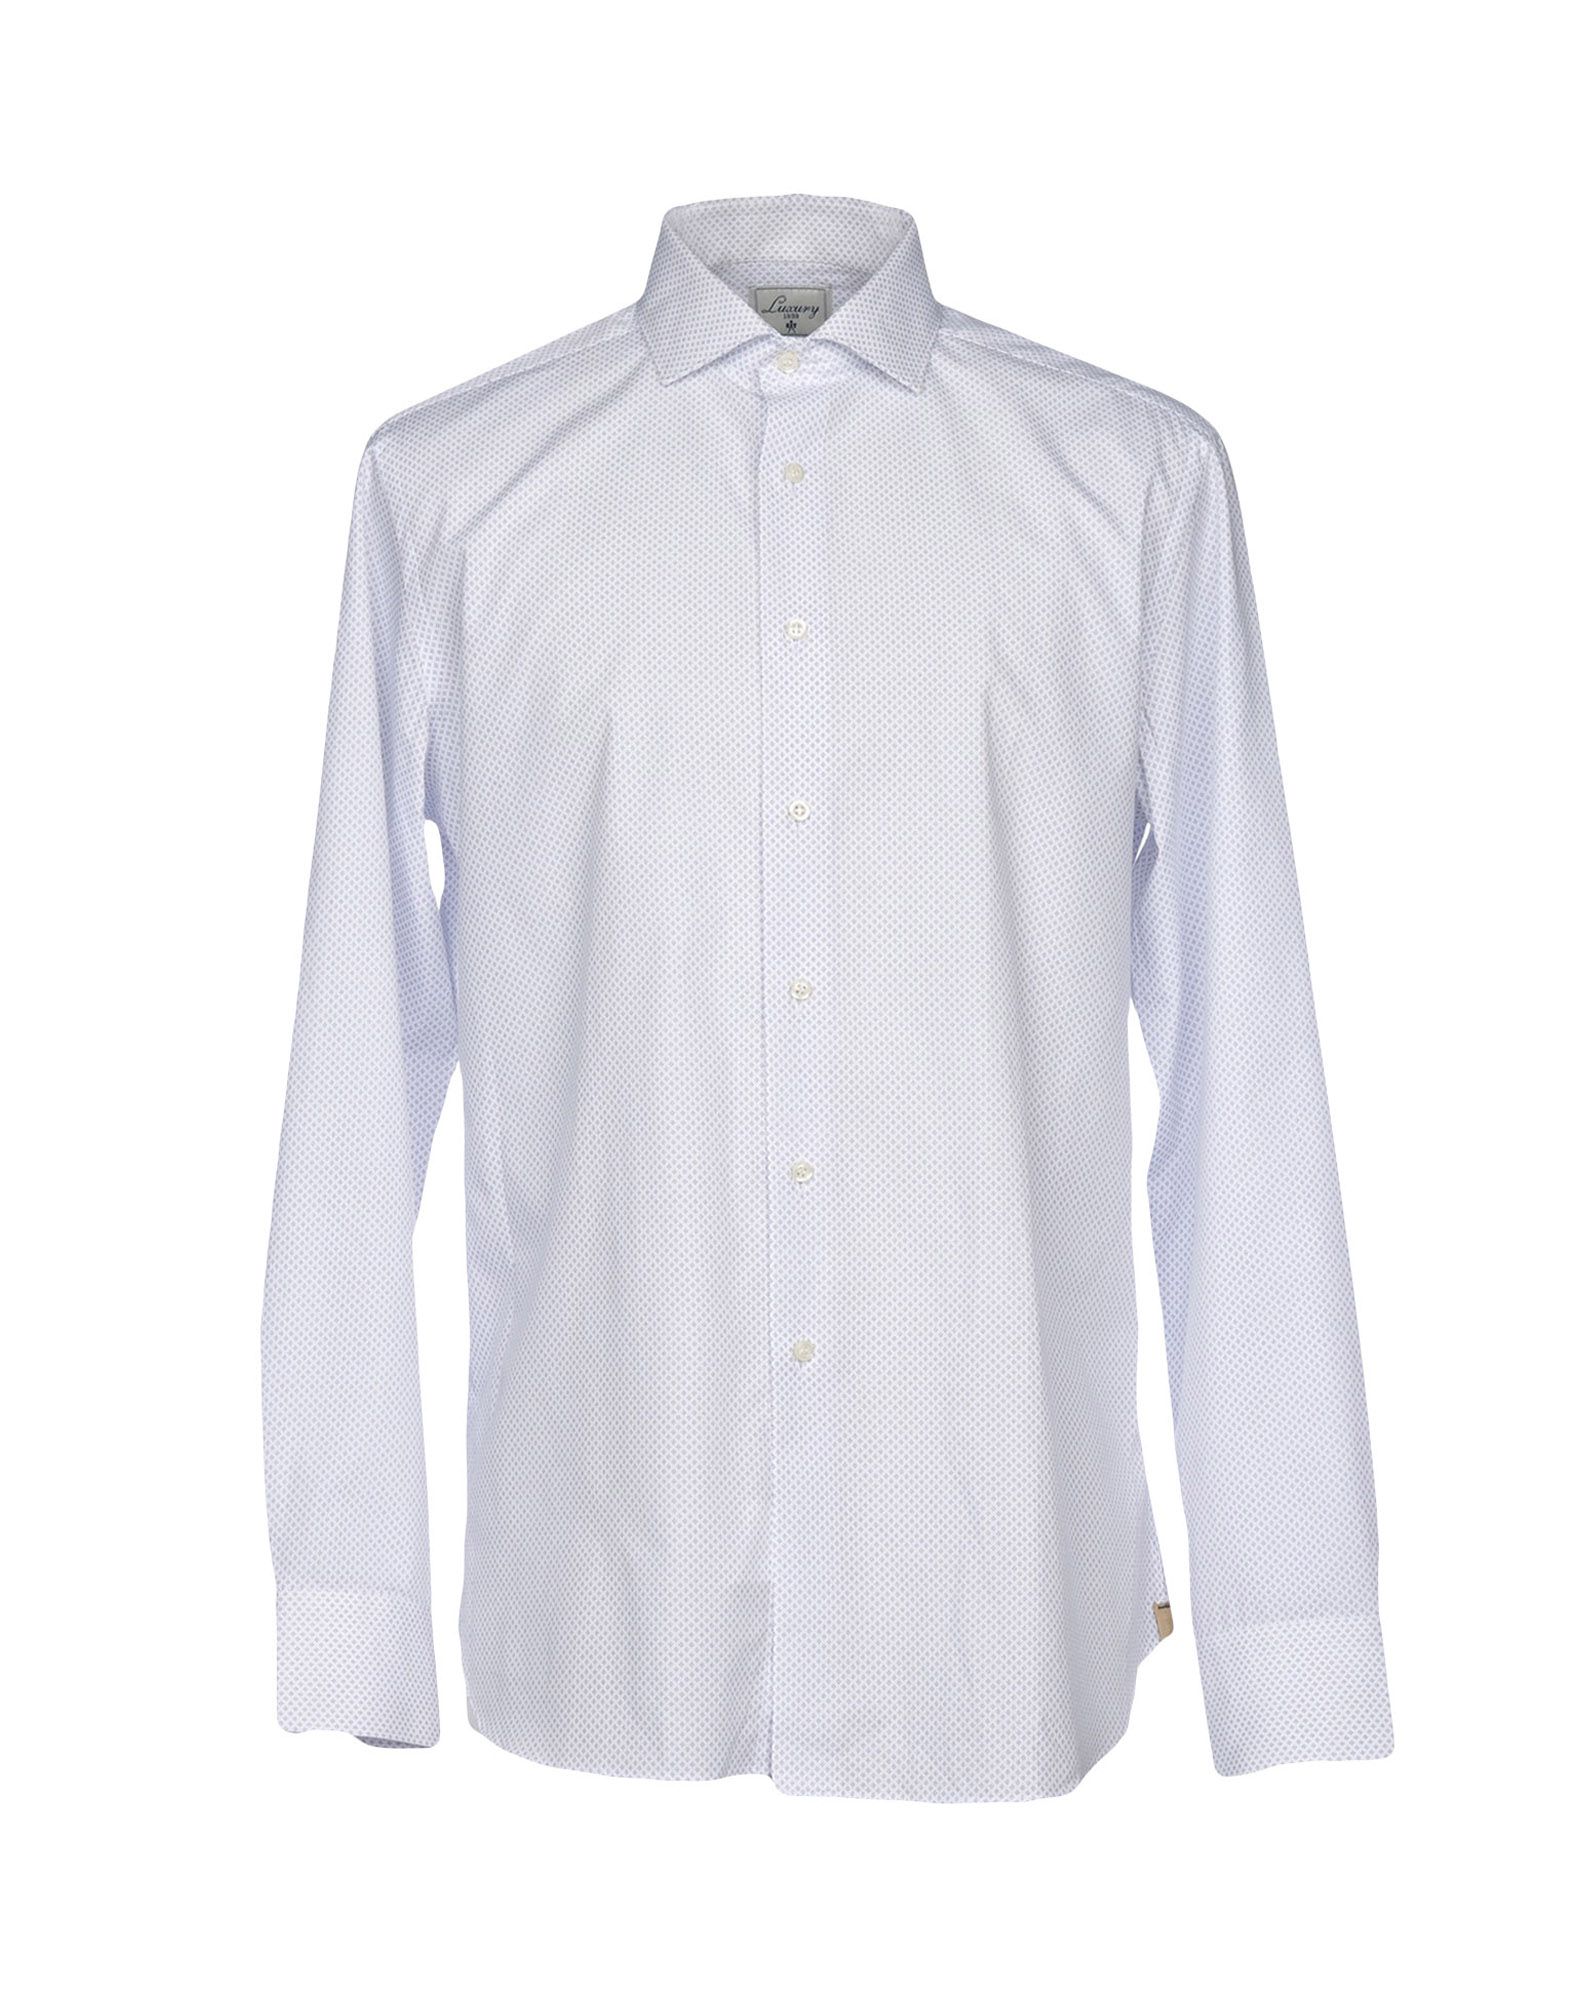 LUXURY Patterned shirt,38739305HP 6